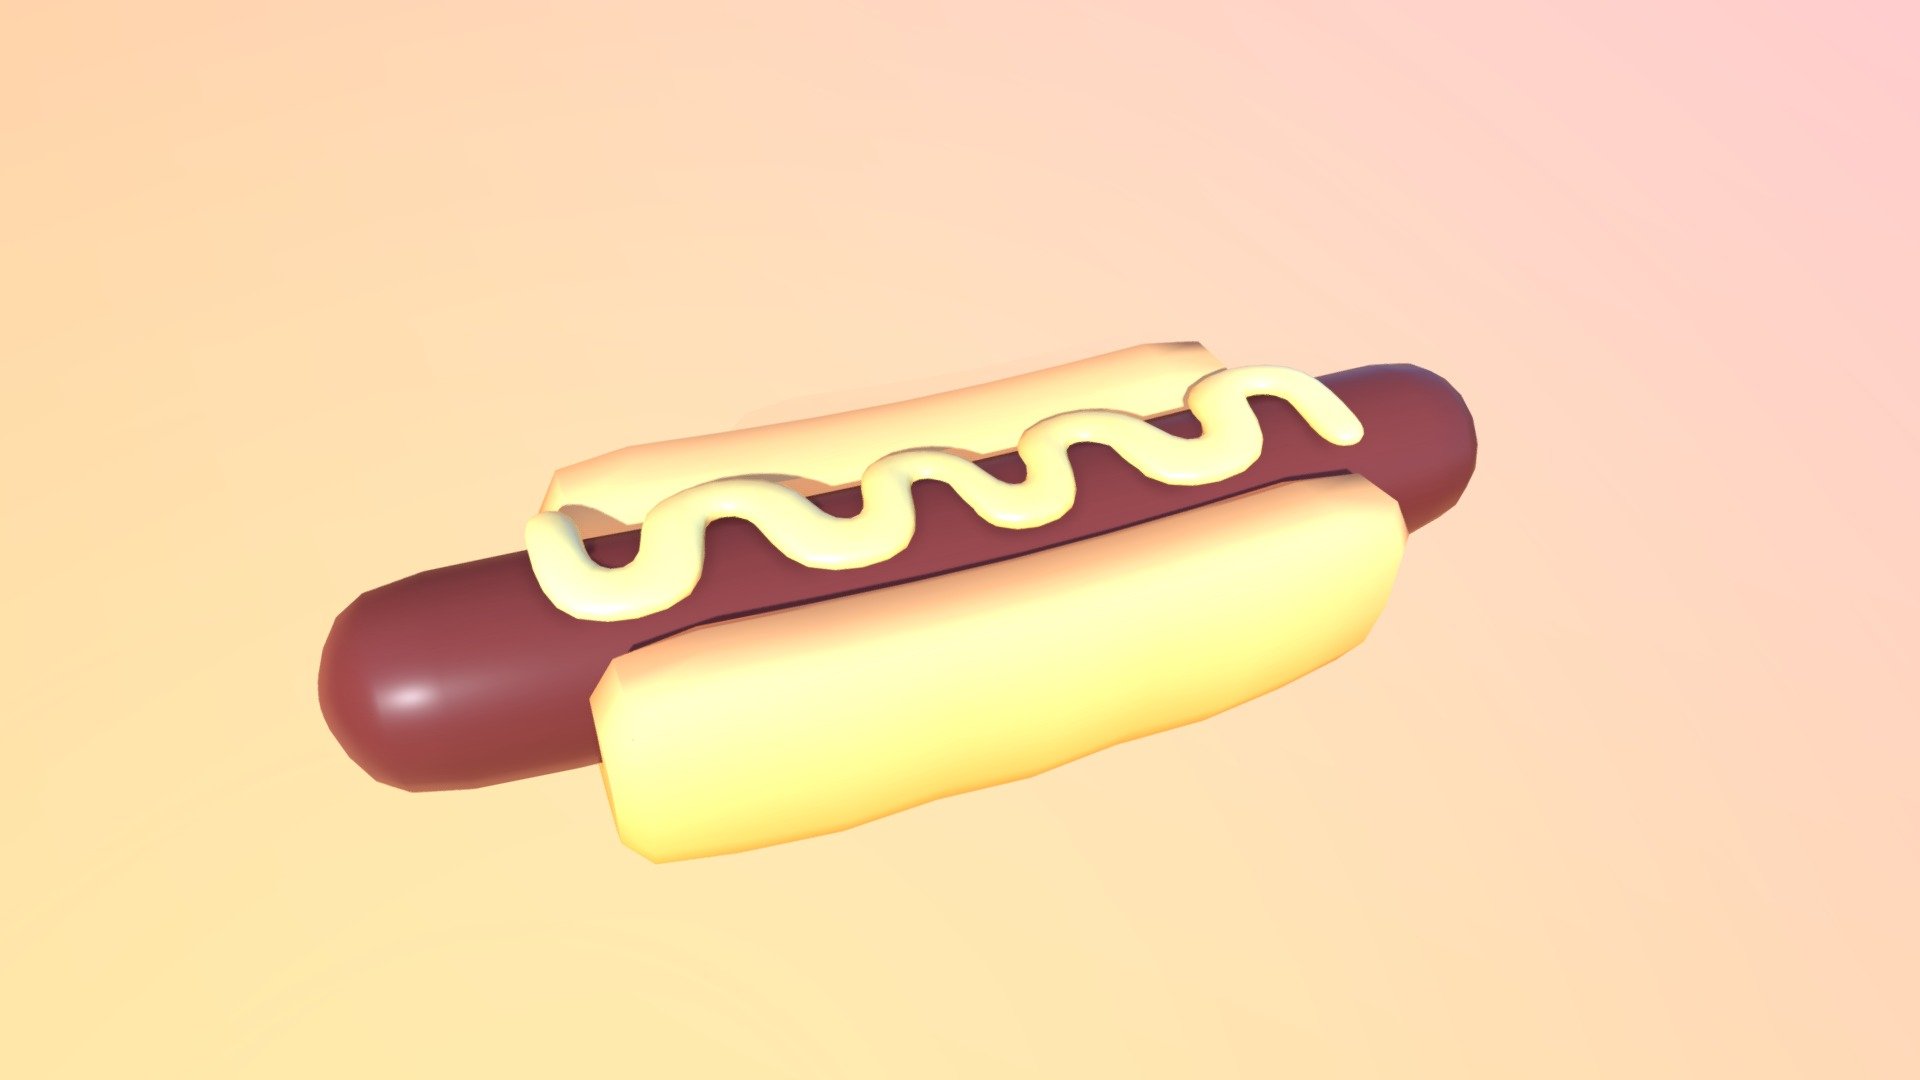 Stylized hotdog with bun, sausage, mustard.
One texture 3d model